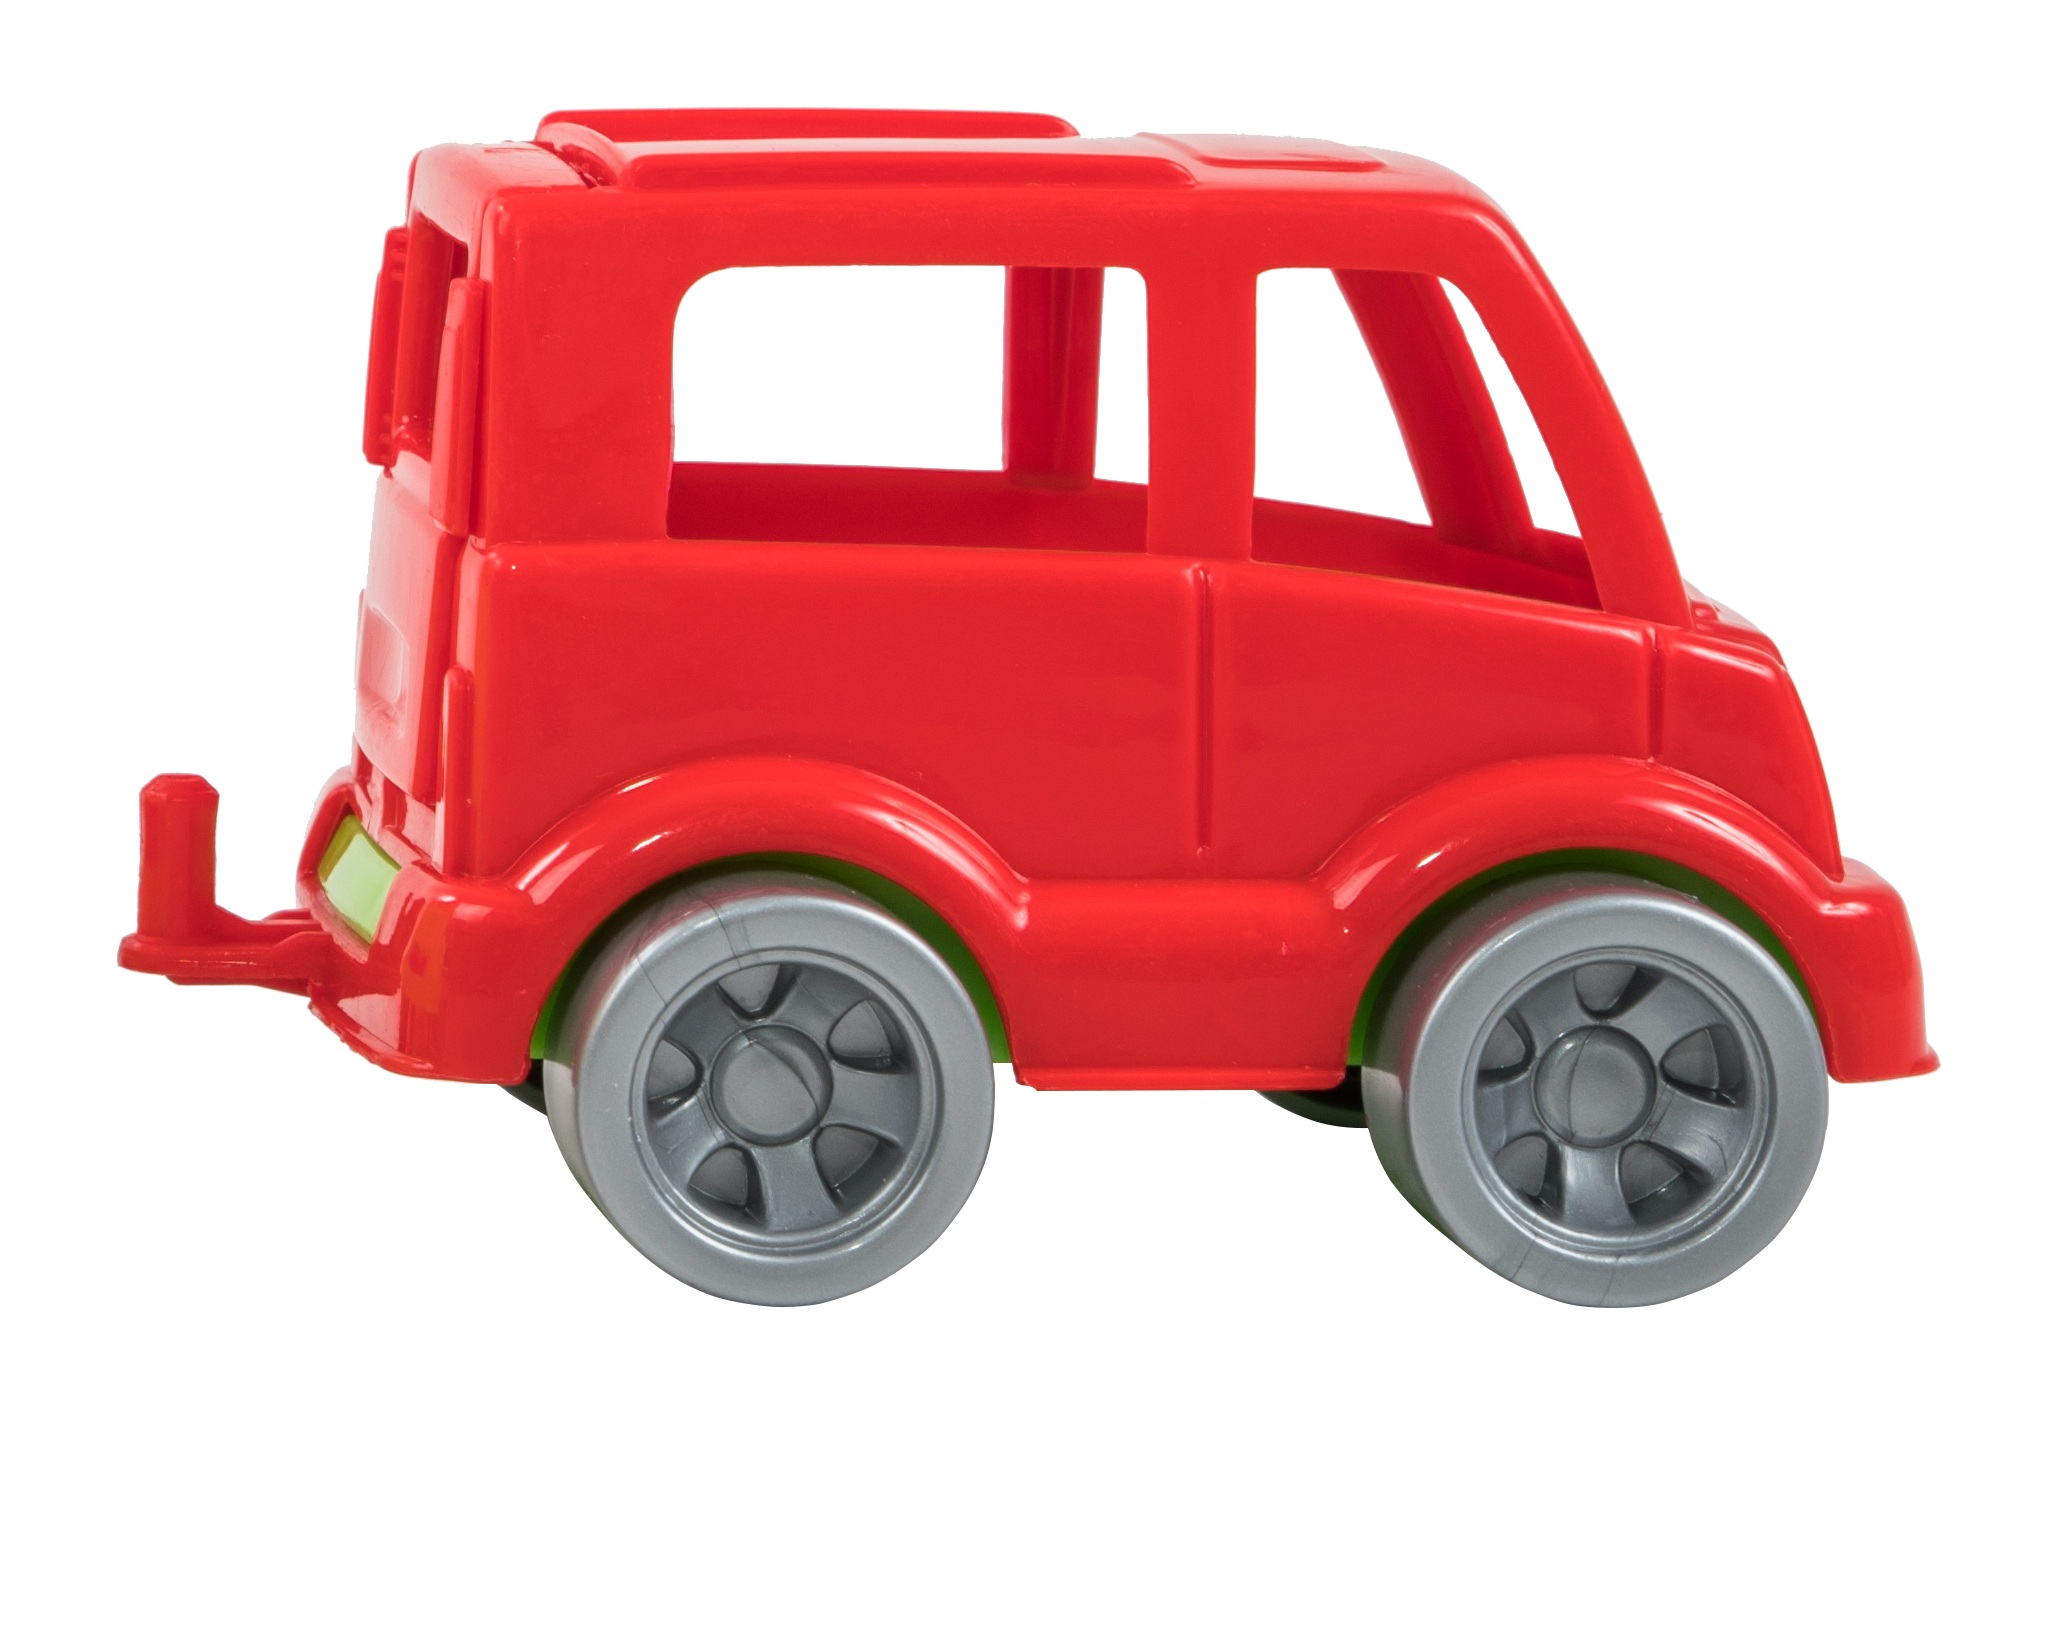 Машина кид. Авто "Kid cars Sport" багги. Запорожская машинка игрушка. Kids avto. Tigres авто ранчо Kid cars.